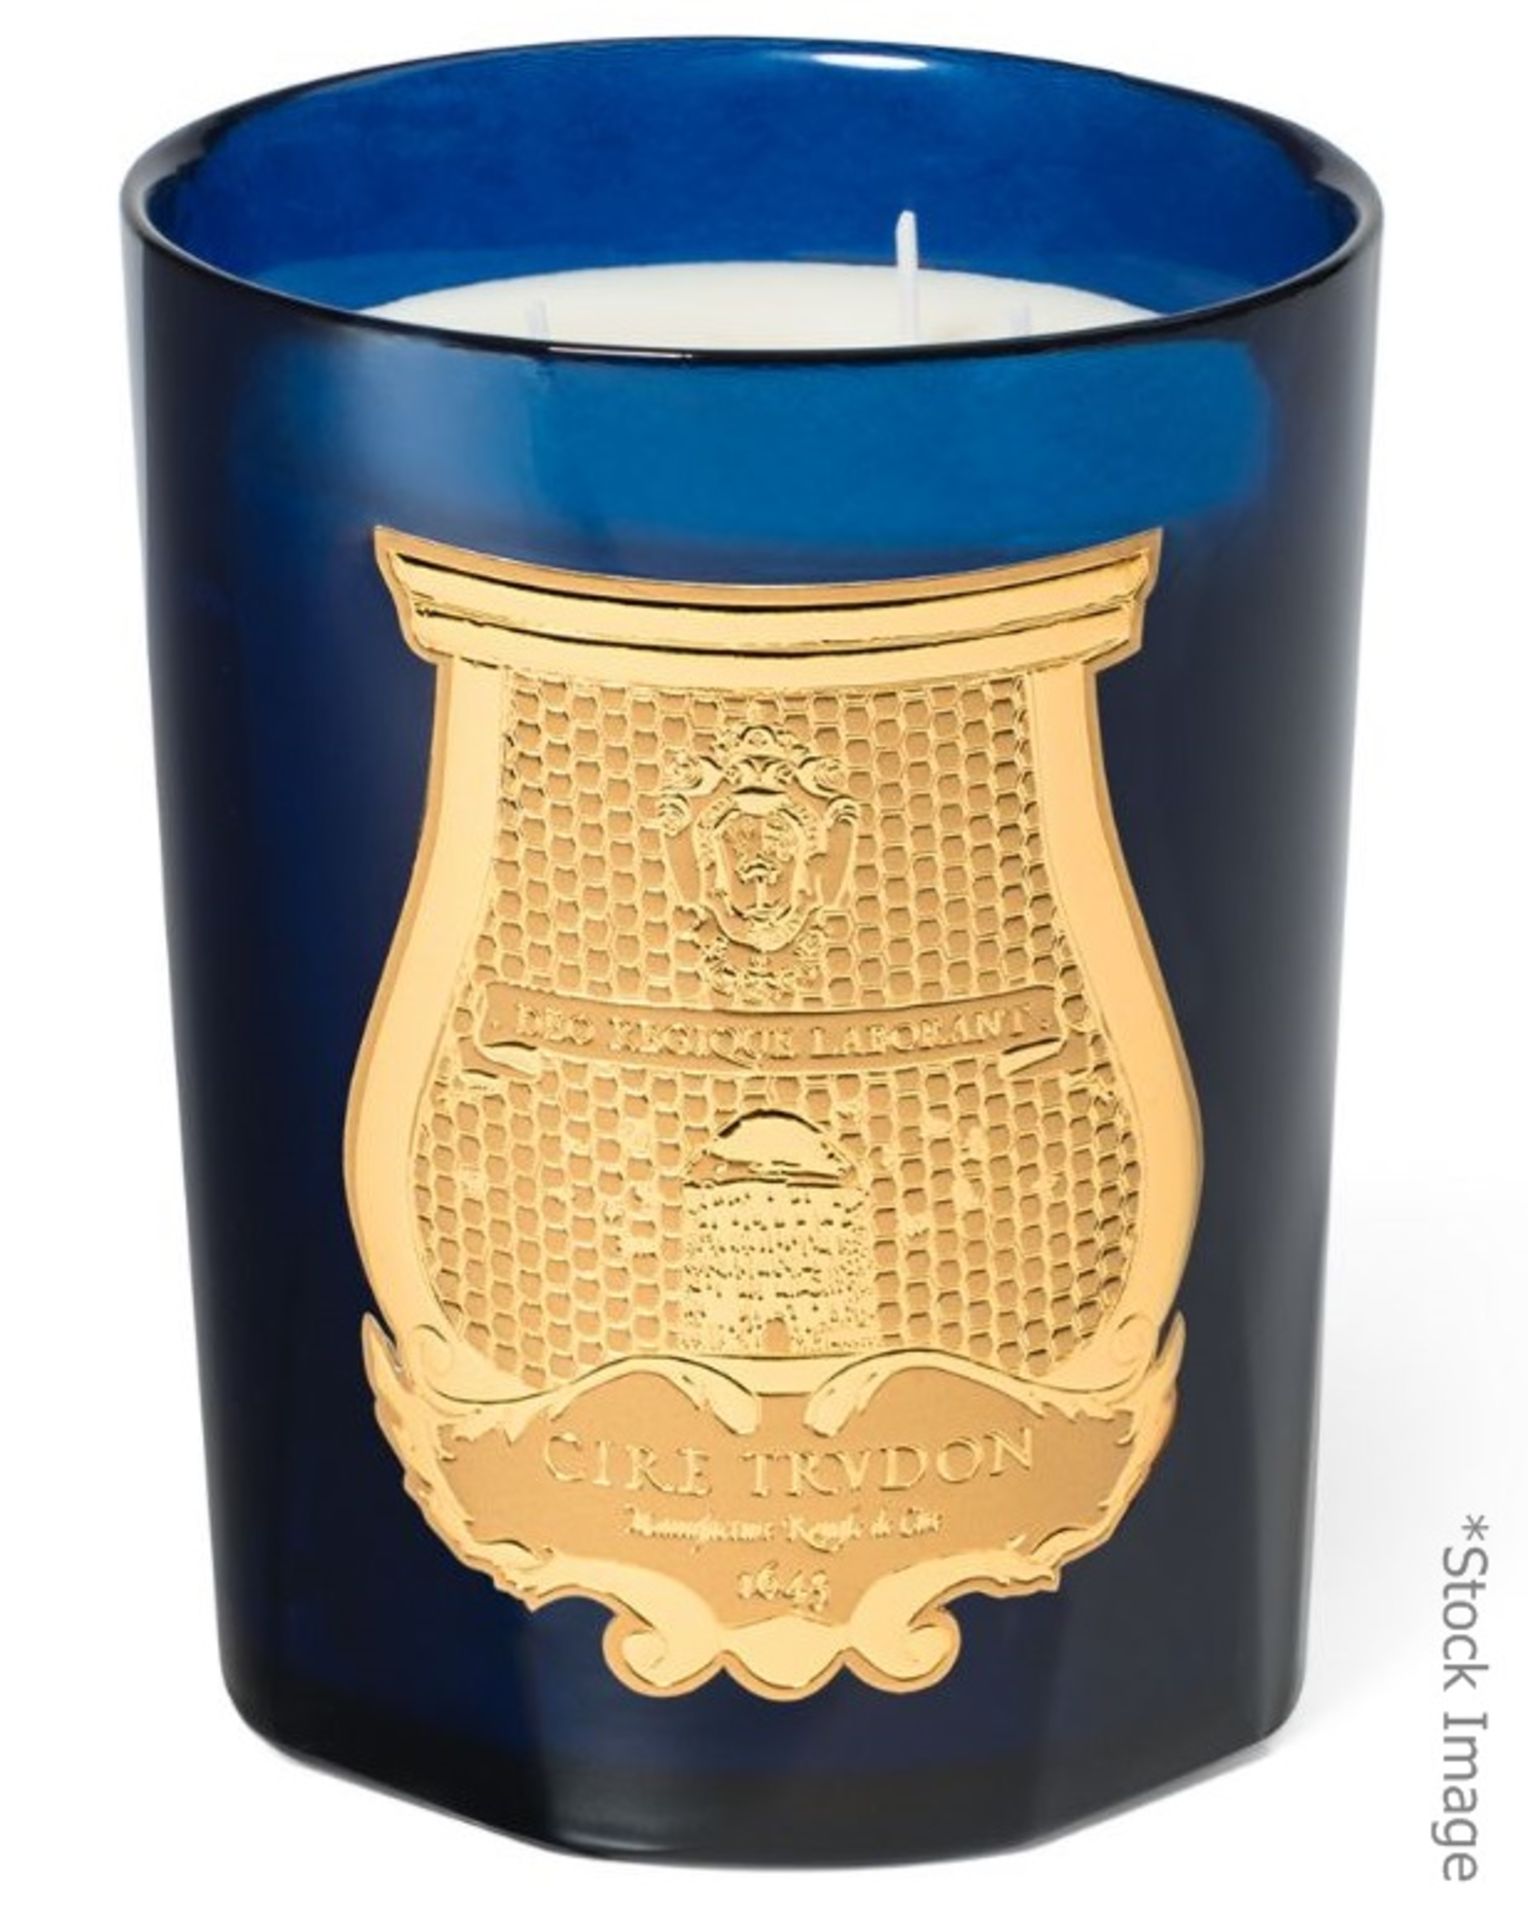 1 x Large CIRE TRUDON 'Les Belles Matières Maduraï' Candle (800g) - Original RRP £230.00 - Ref: